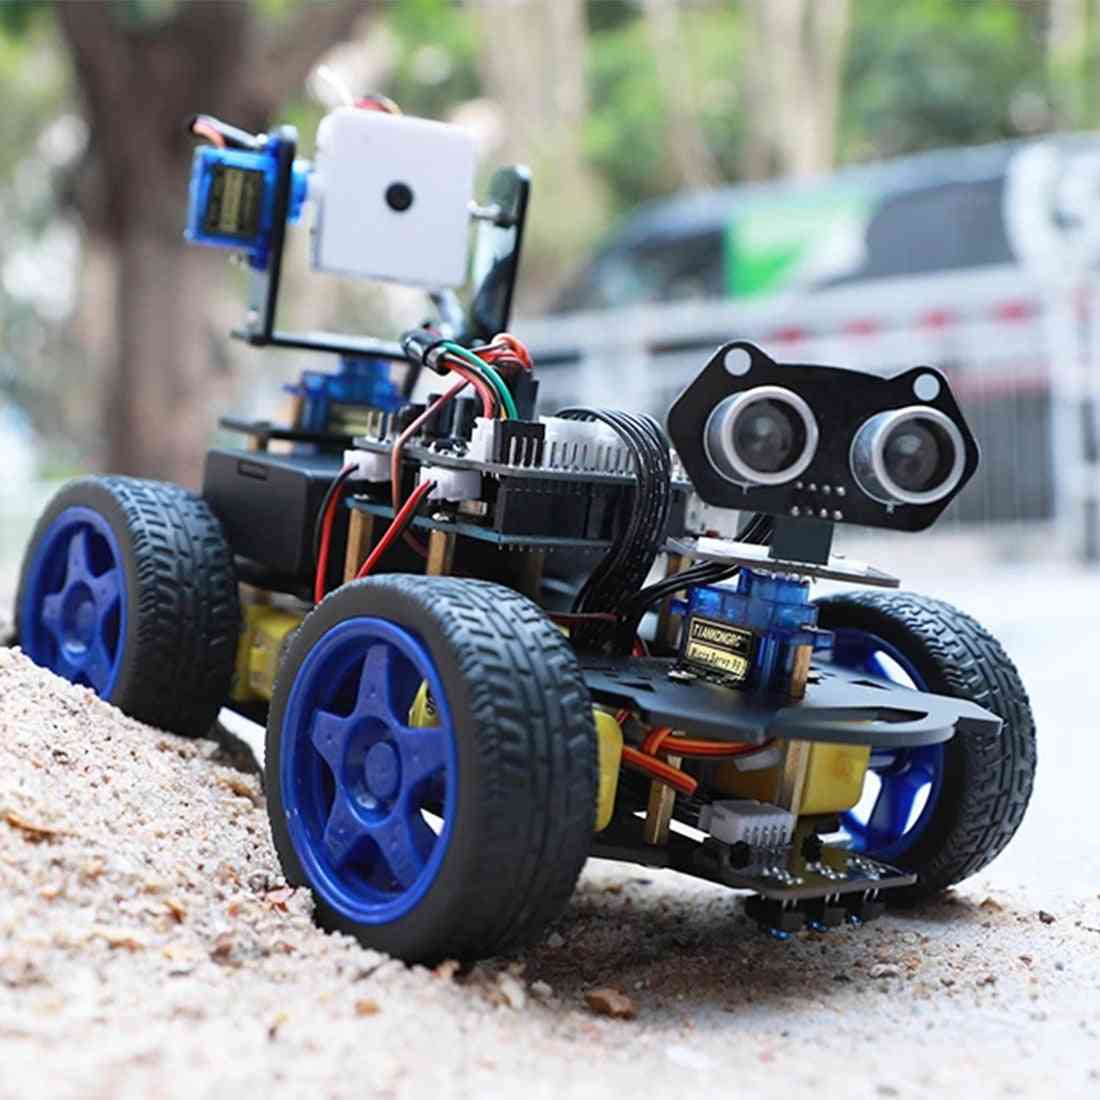 Luminescent Ultrasonic Module, Smart Robot Car, Wifi Camera, Gimbal Kit For Arduino